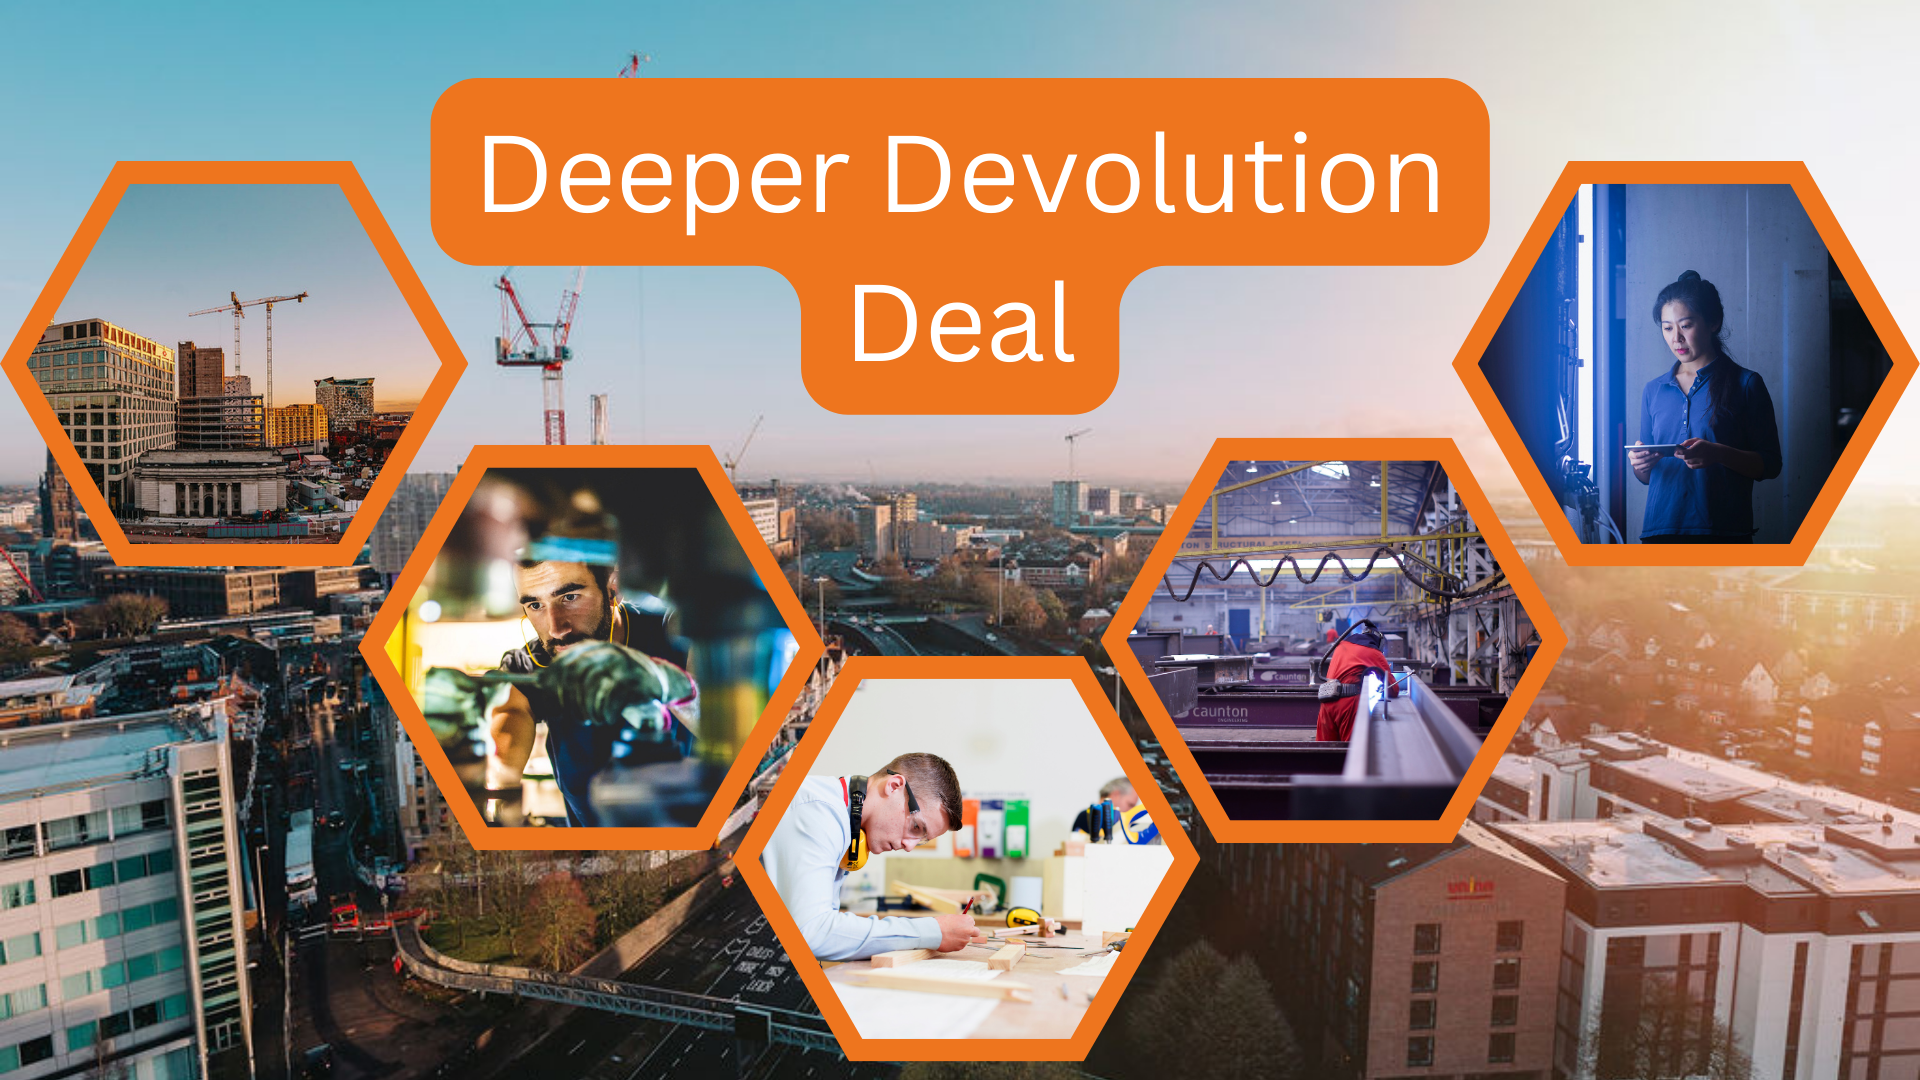 Deeper Devolution Deal logo featuring working people